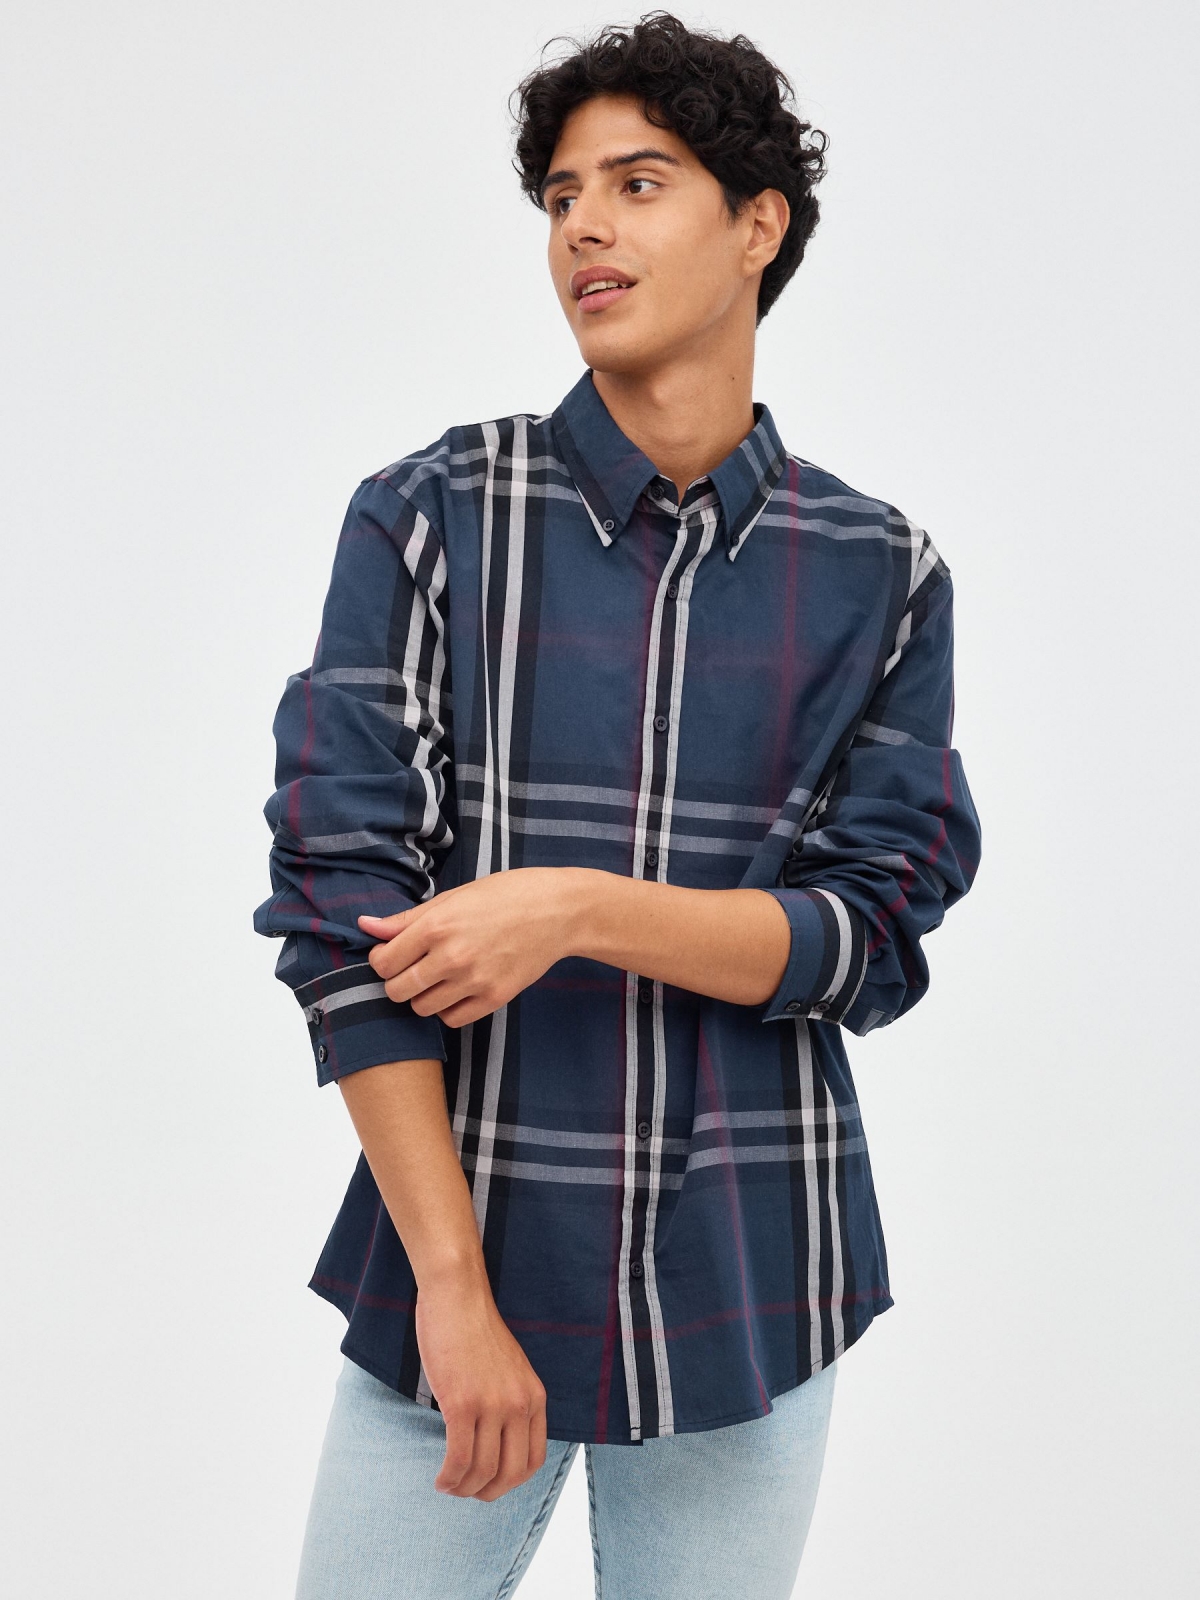 Camisa de lã axadrezada regular azul vista meia frontal